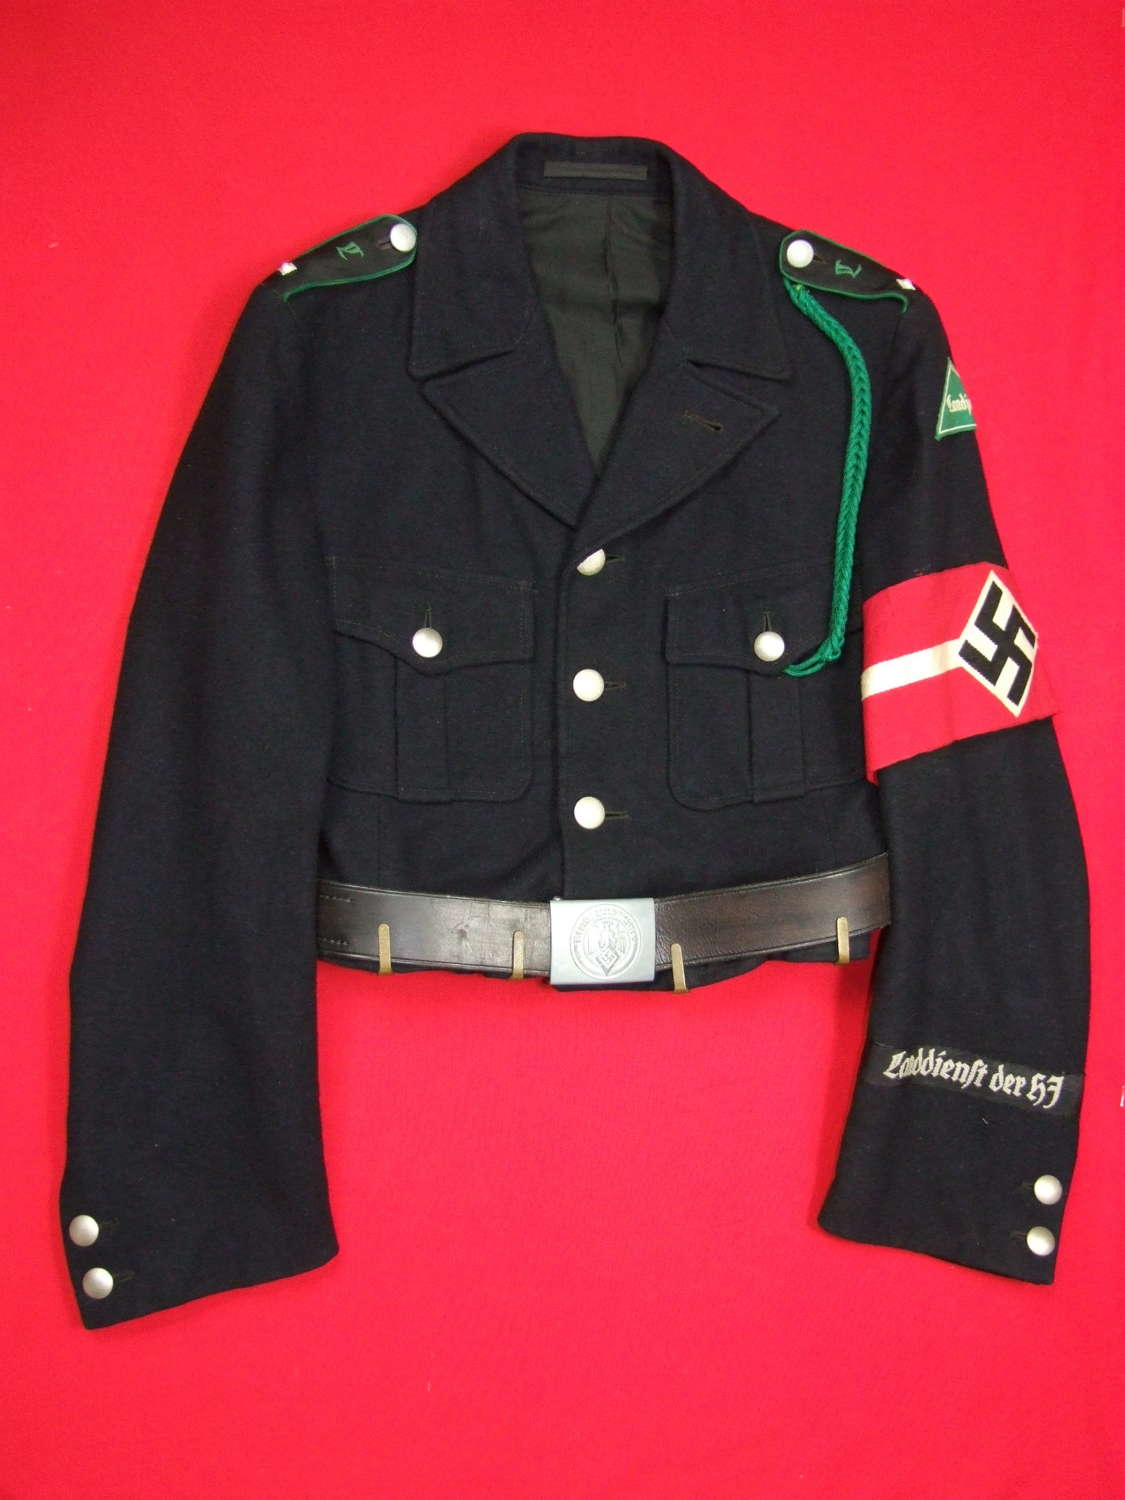 Hitler Youth Uniform Blouse - Landjahr